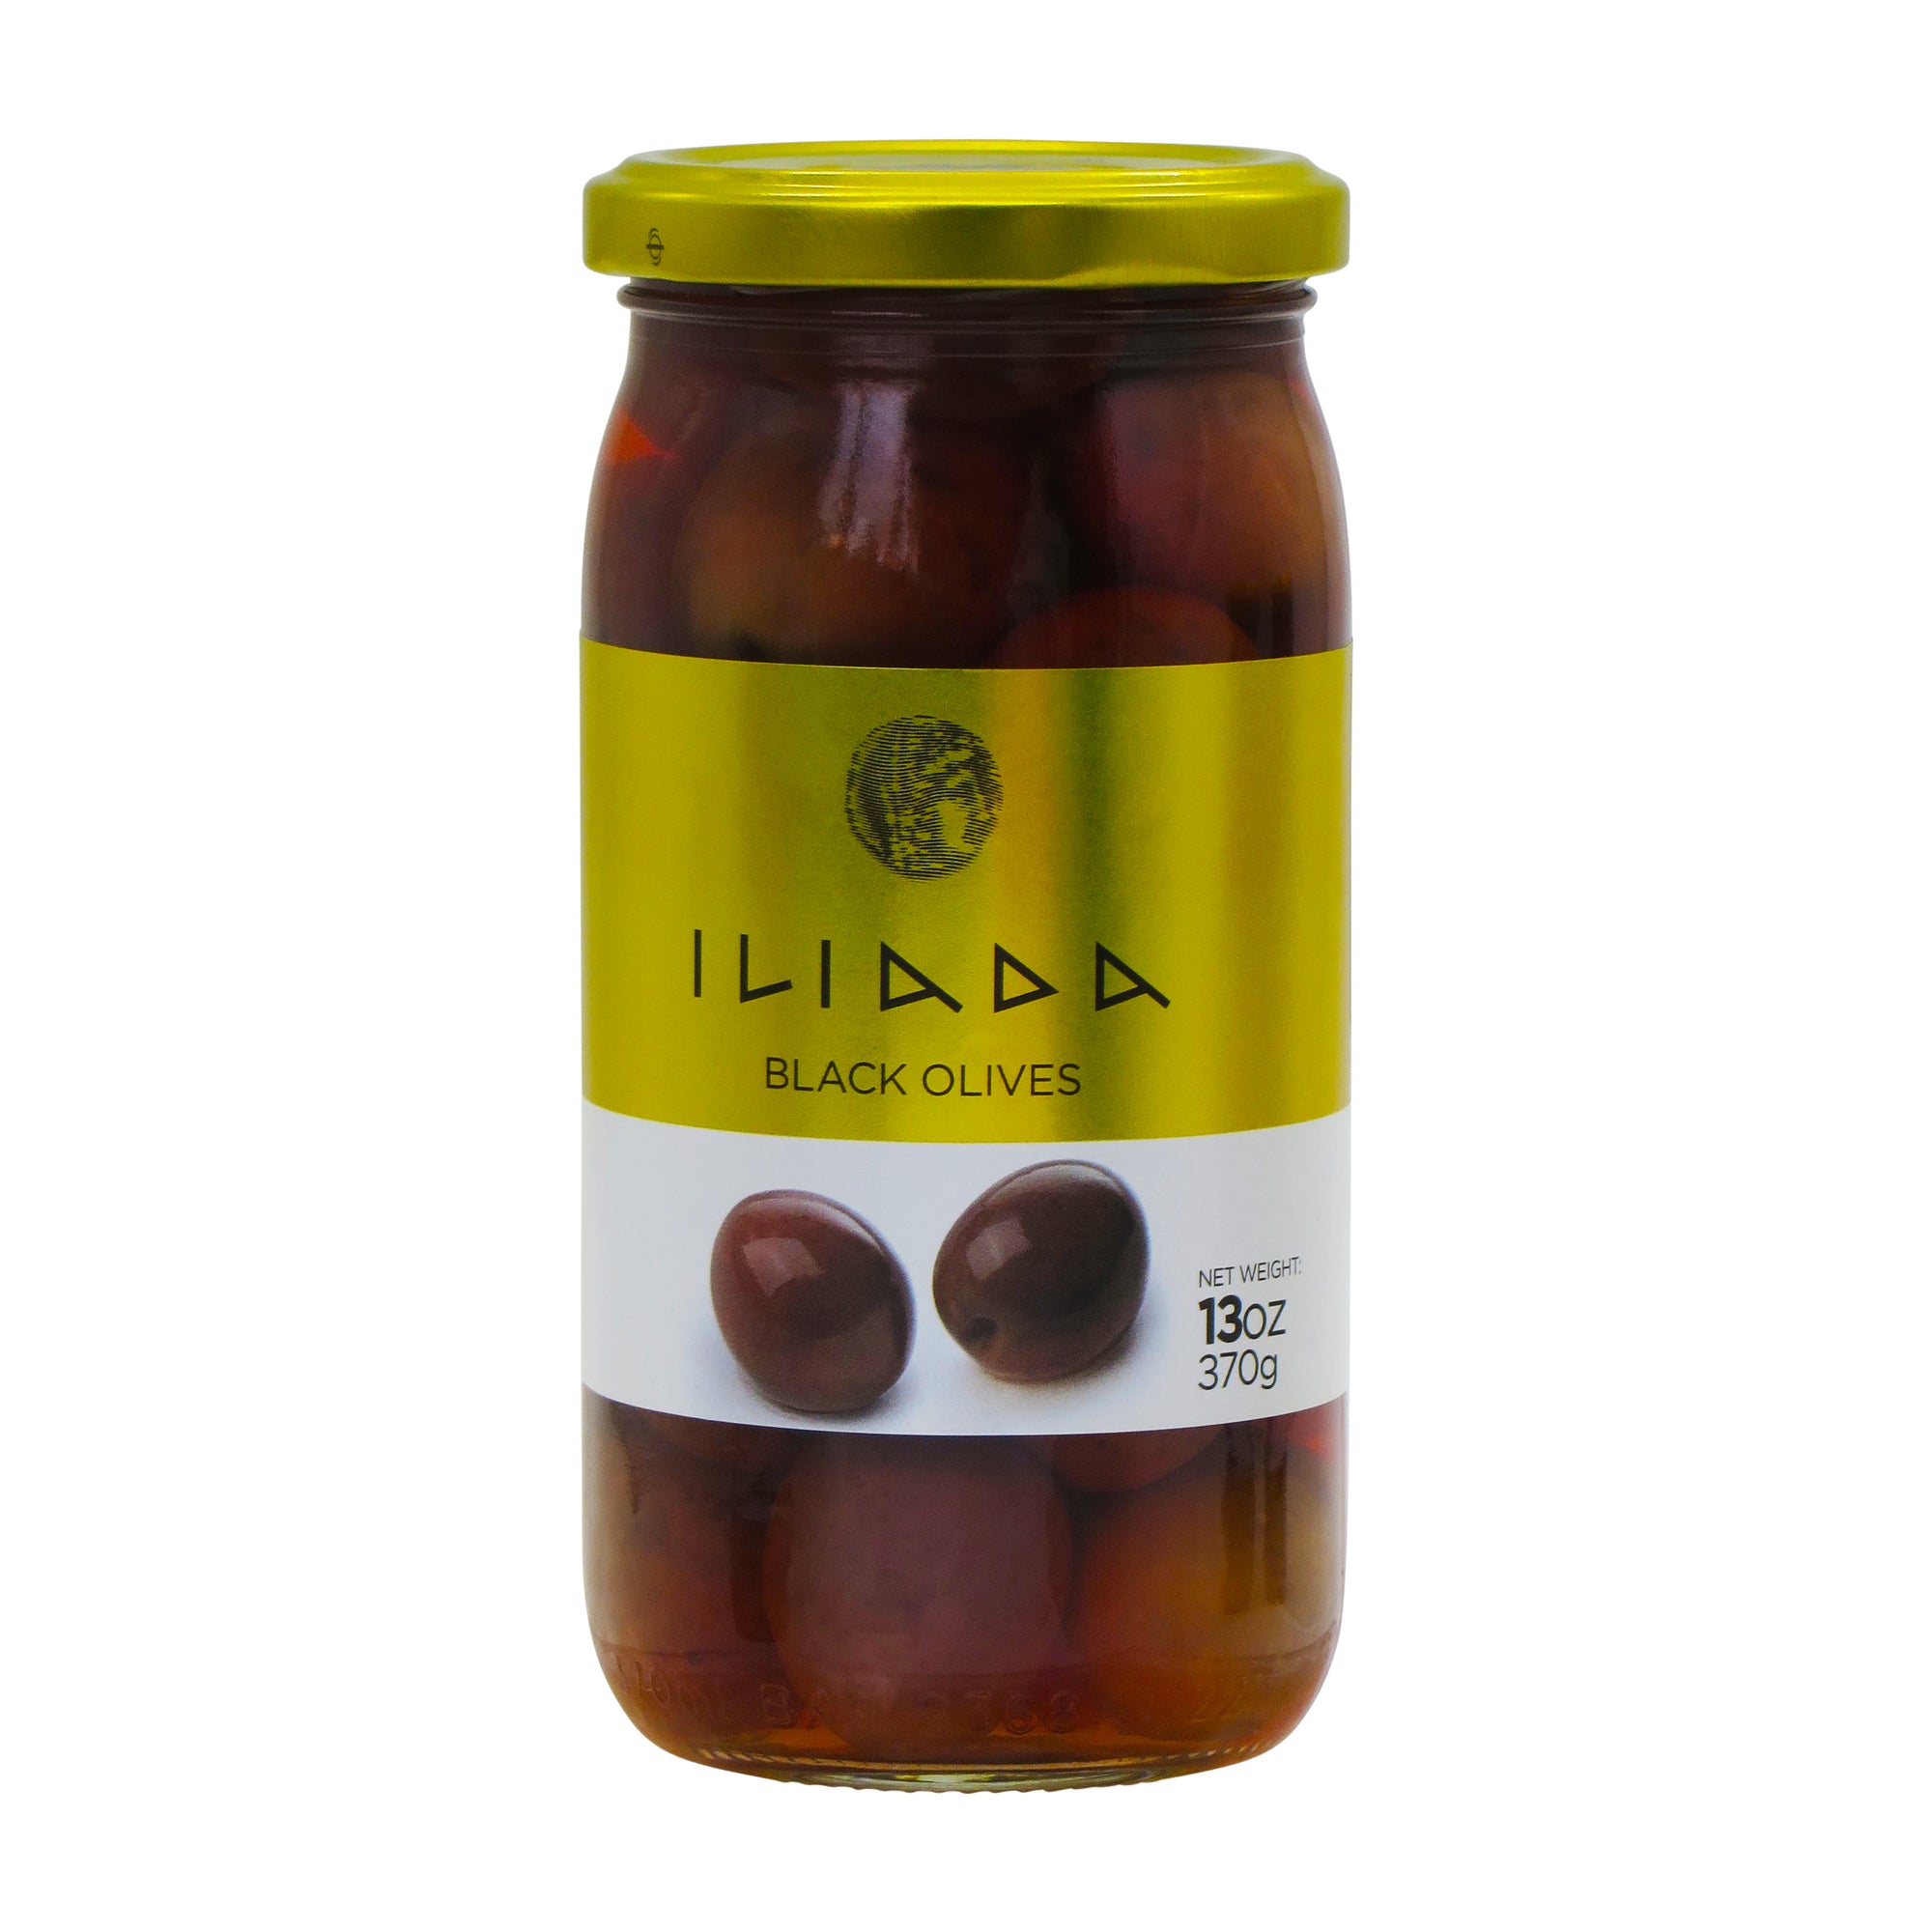 Black Olives 'Iliada' 370g